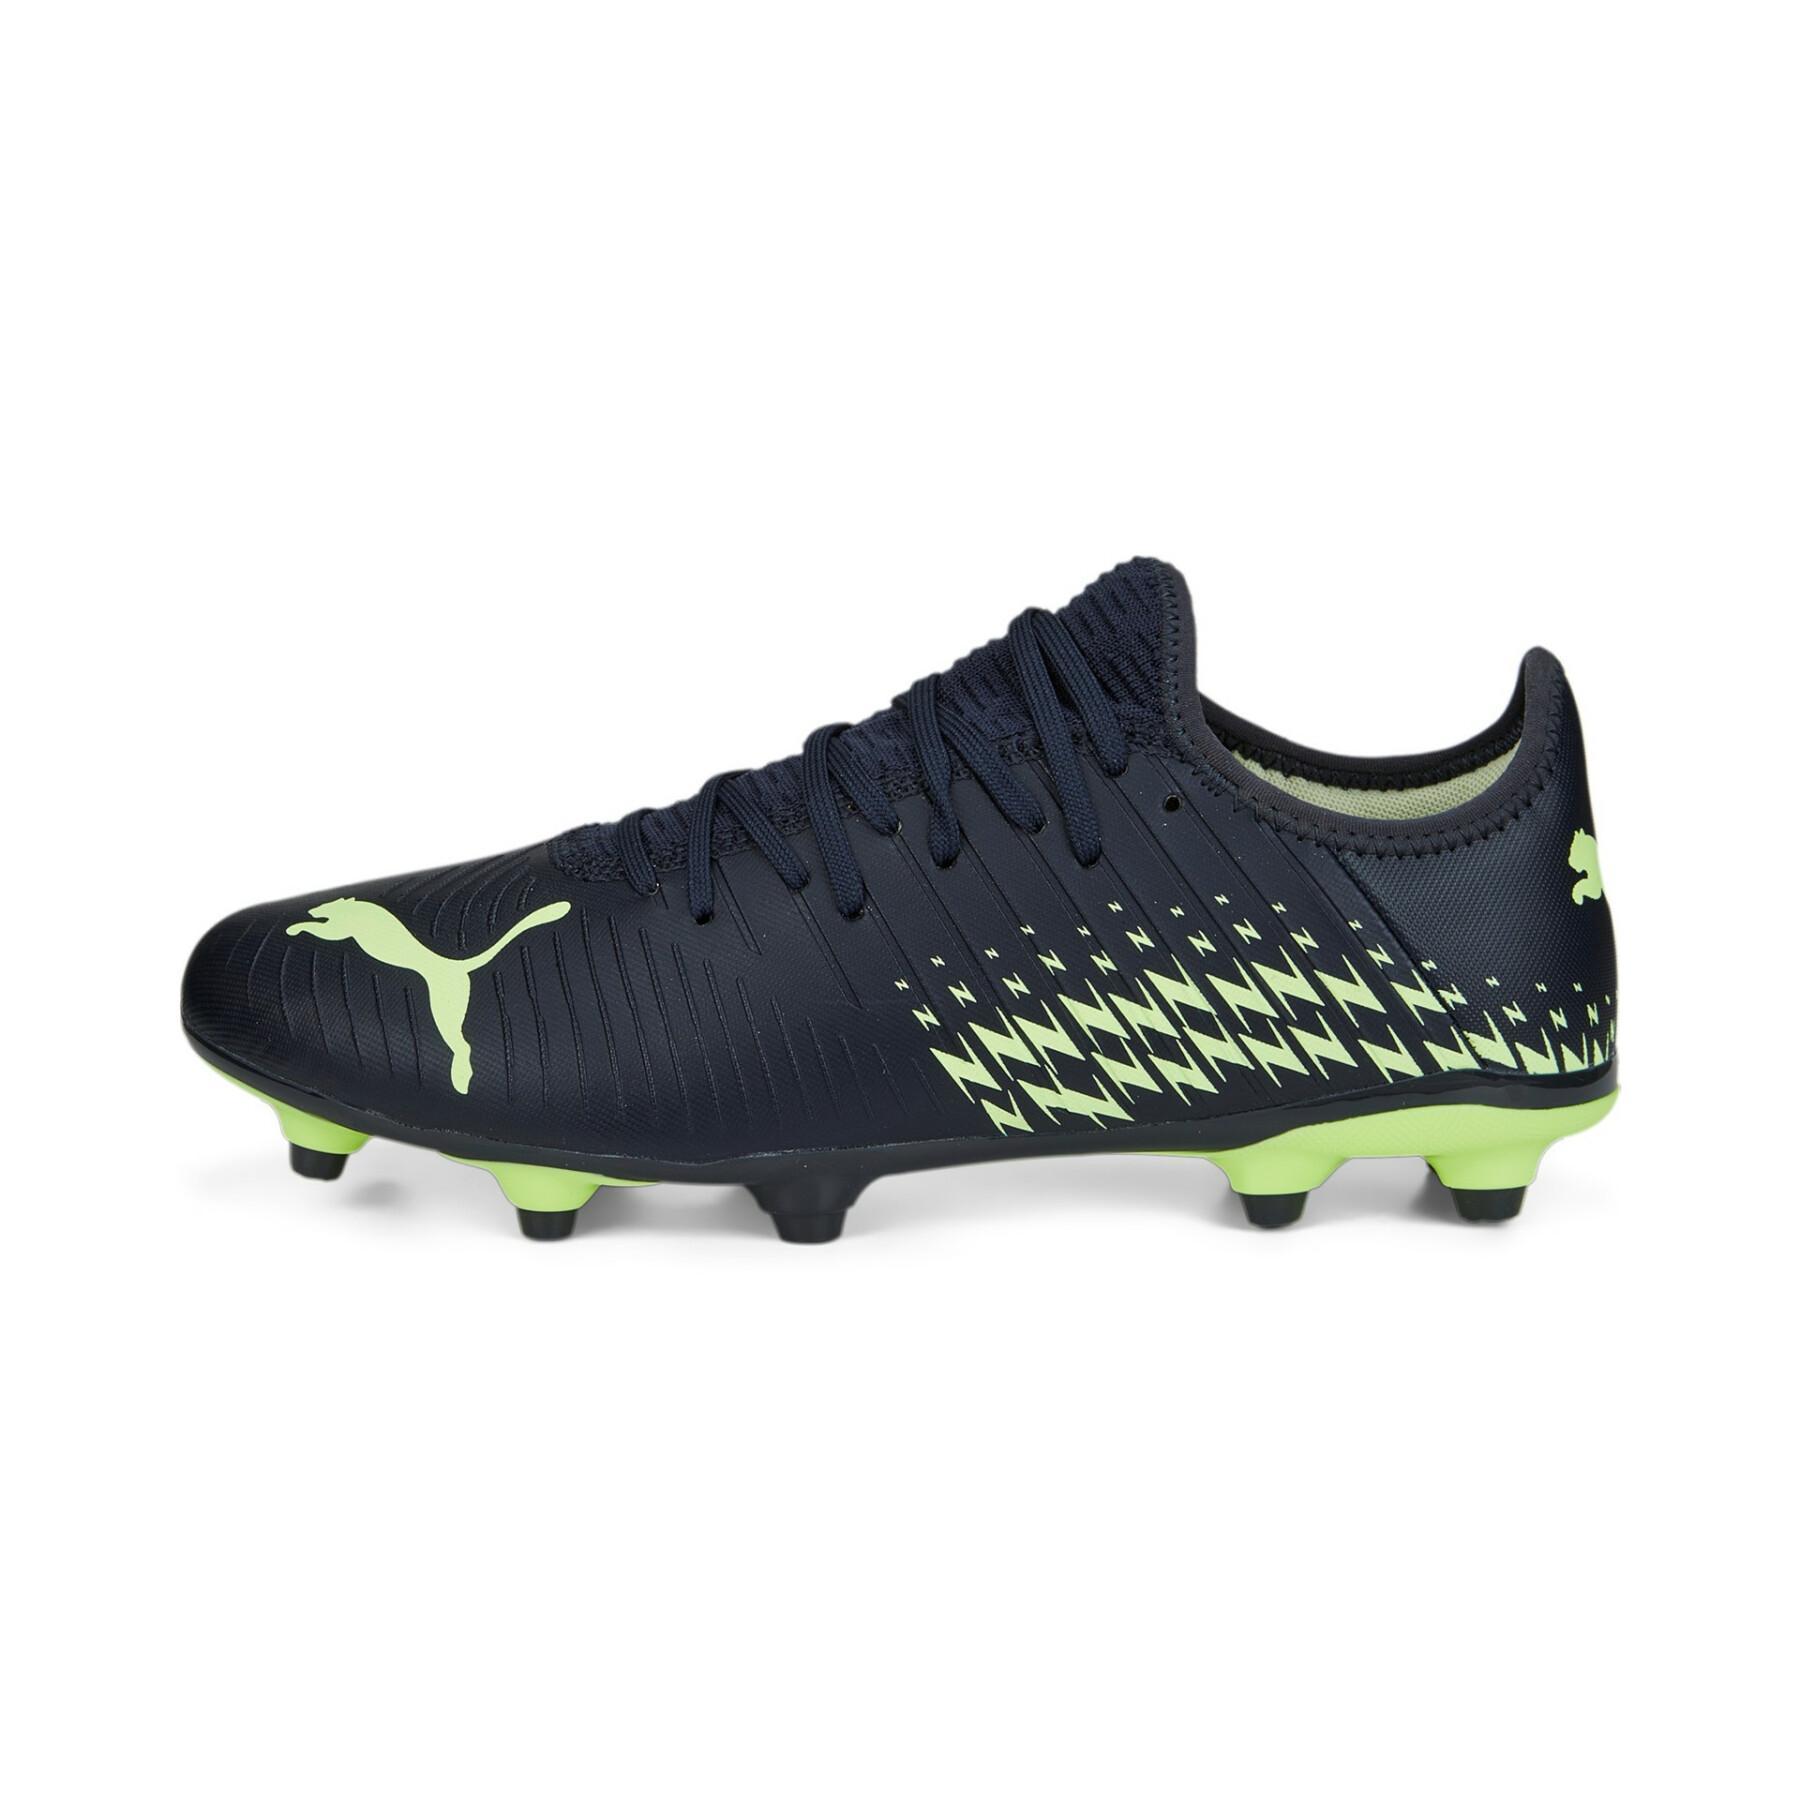 Soccer shoes Puma Future Z 4.4 FG/AG - Fastest Pack